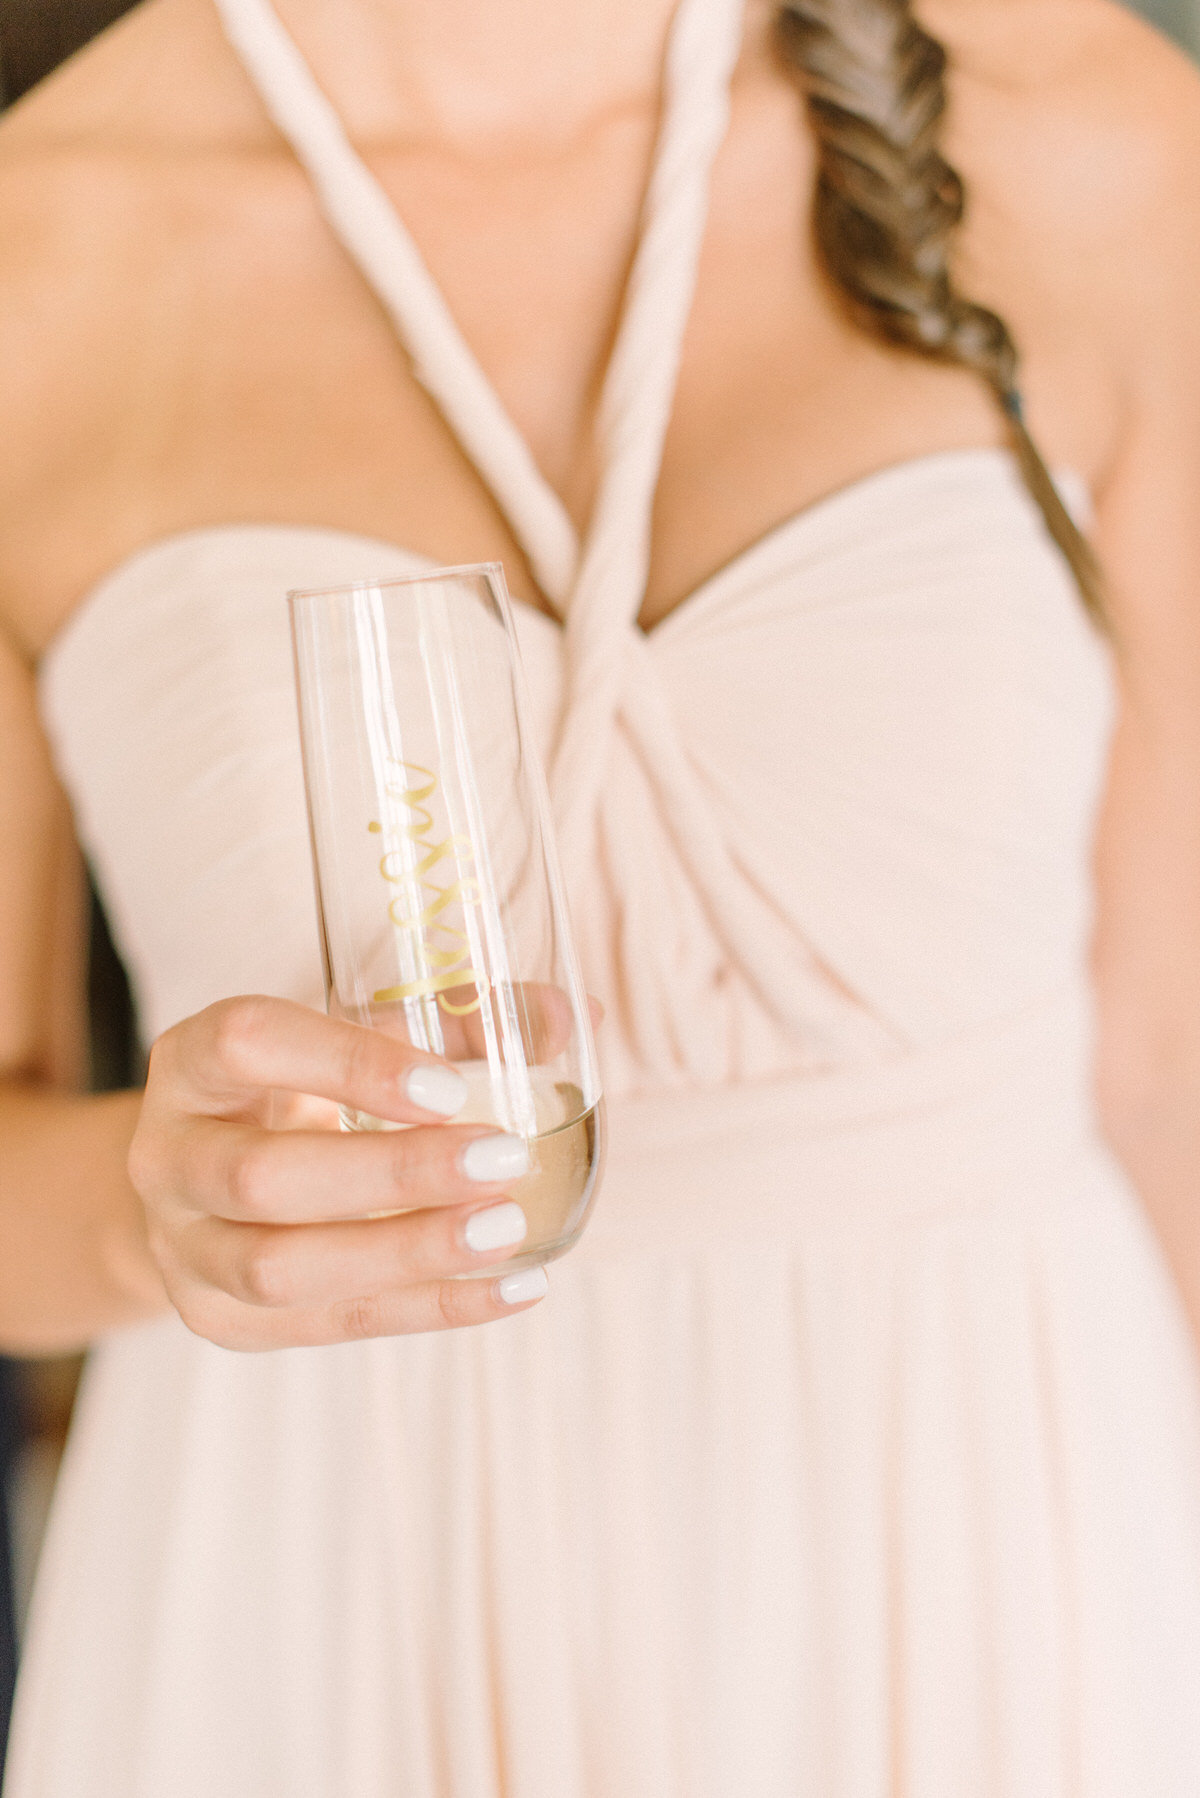 custom wine glasses, bridesmaid gift